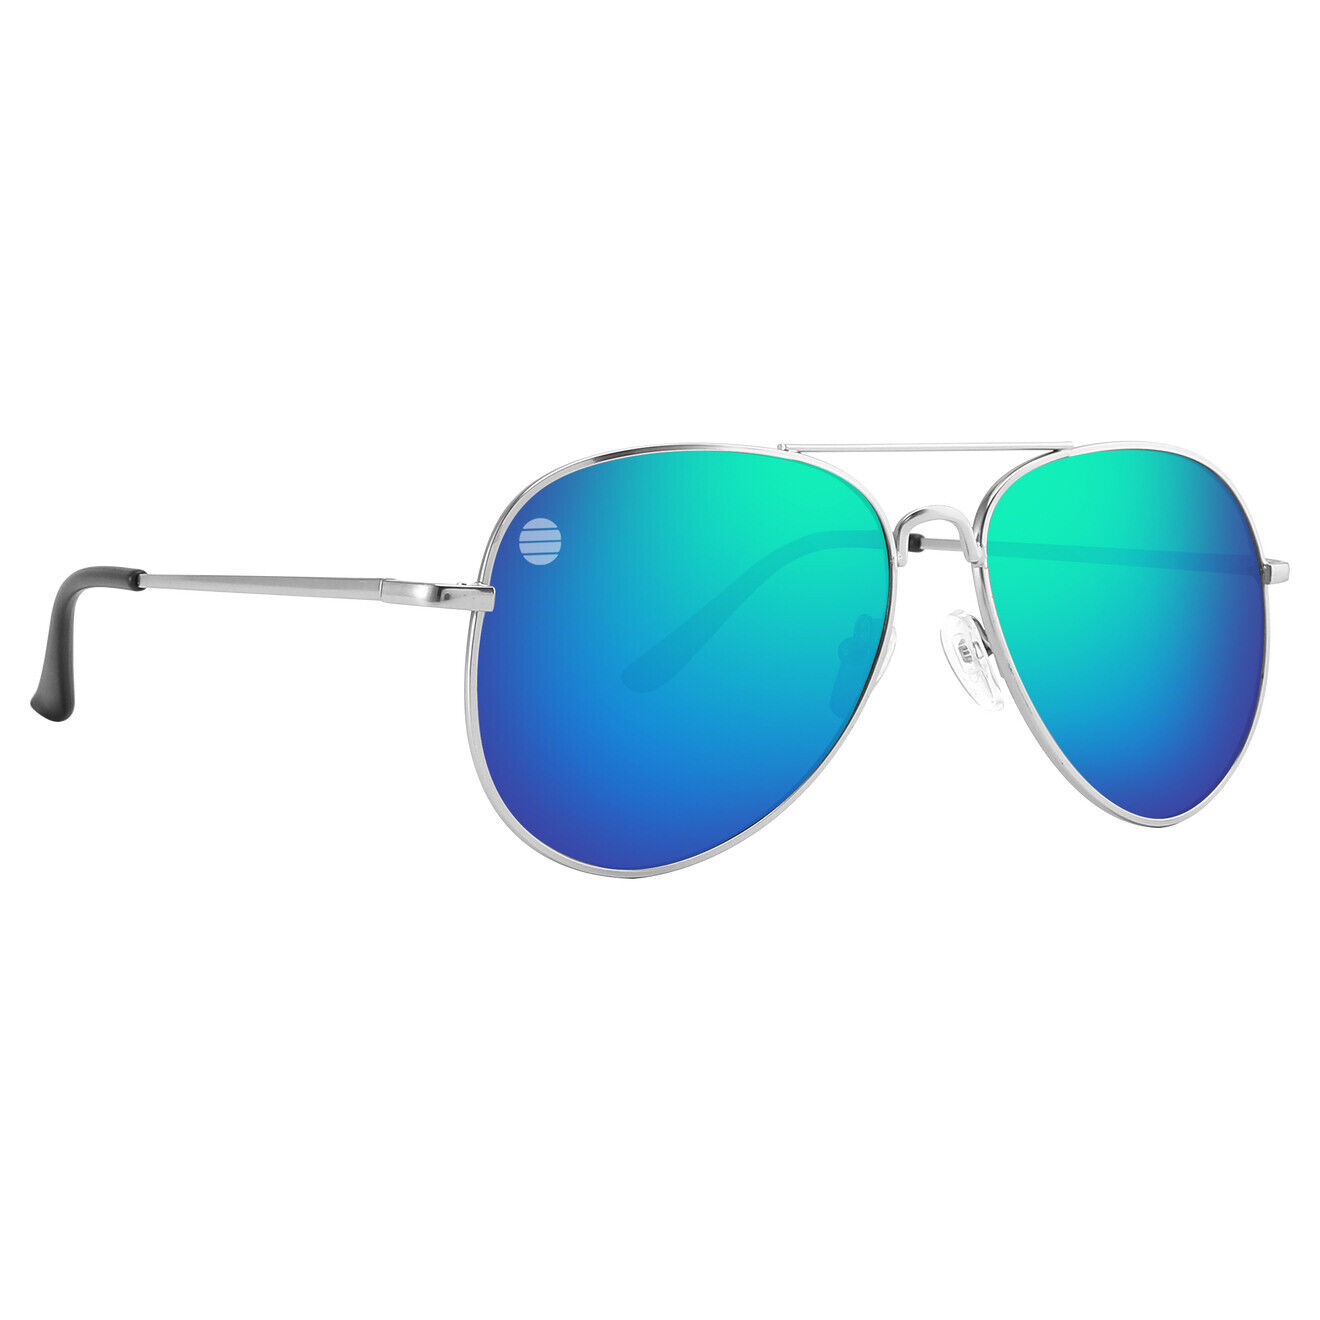 New USA Sunglasses Premium Military Pilot Ultraviolet Mens Polarized Sunglasses